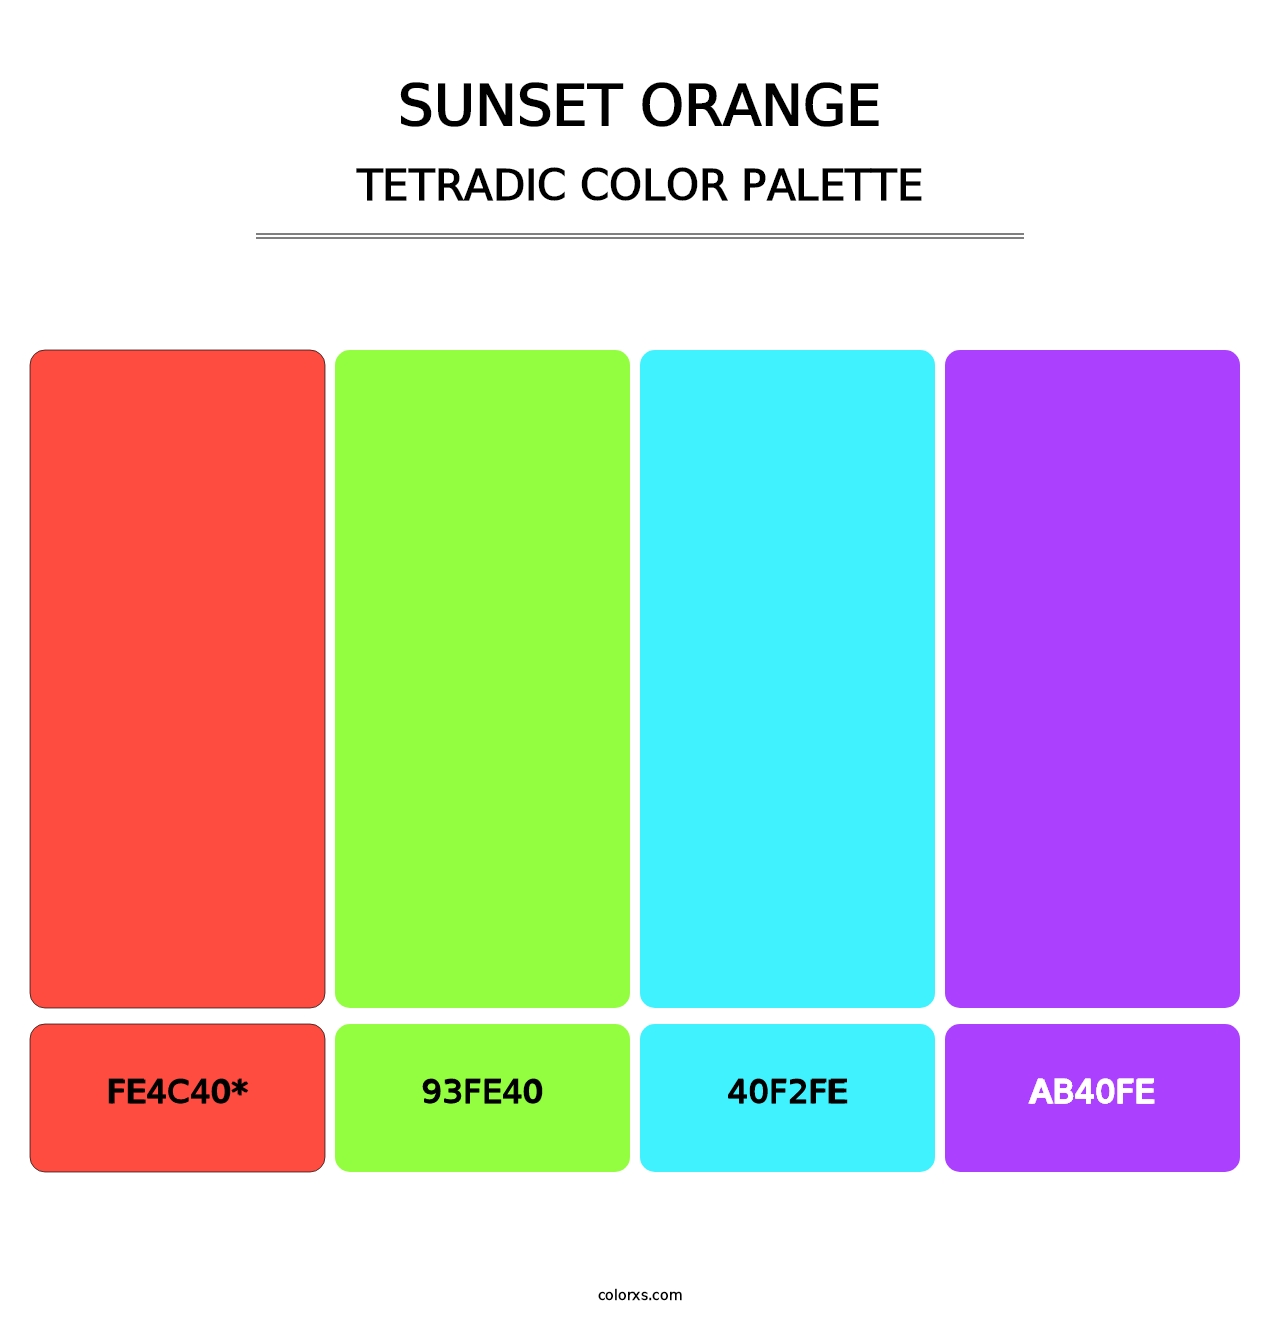 Sunset Orange - Tetradic Color Palette